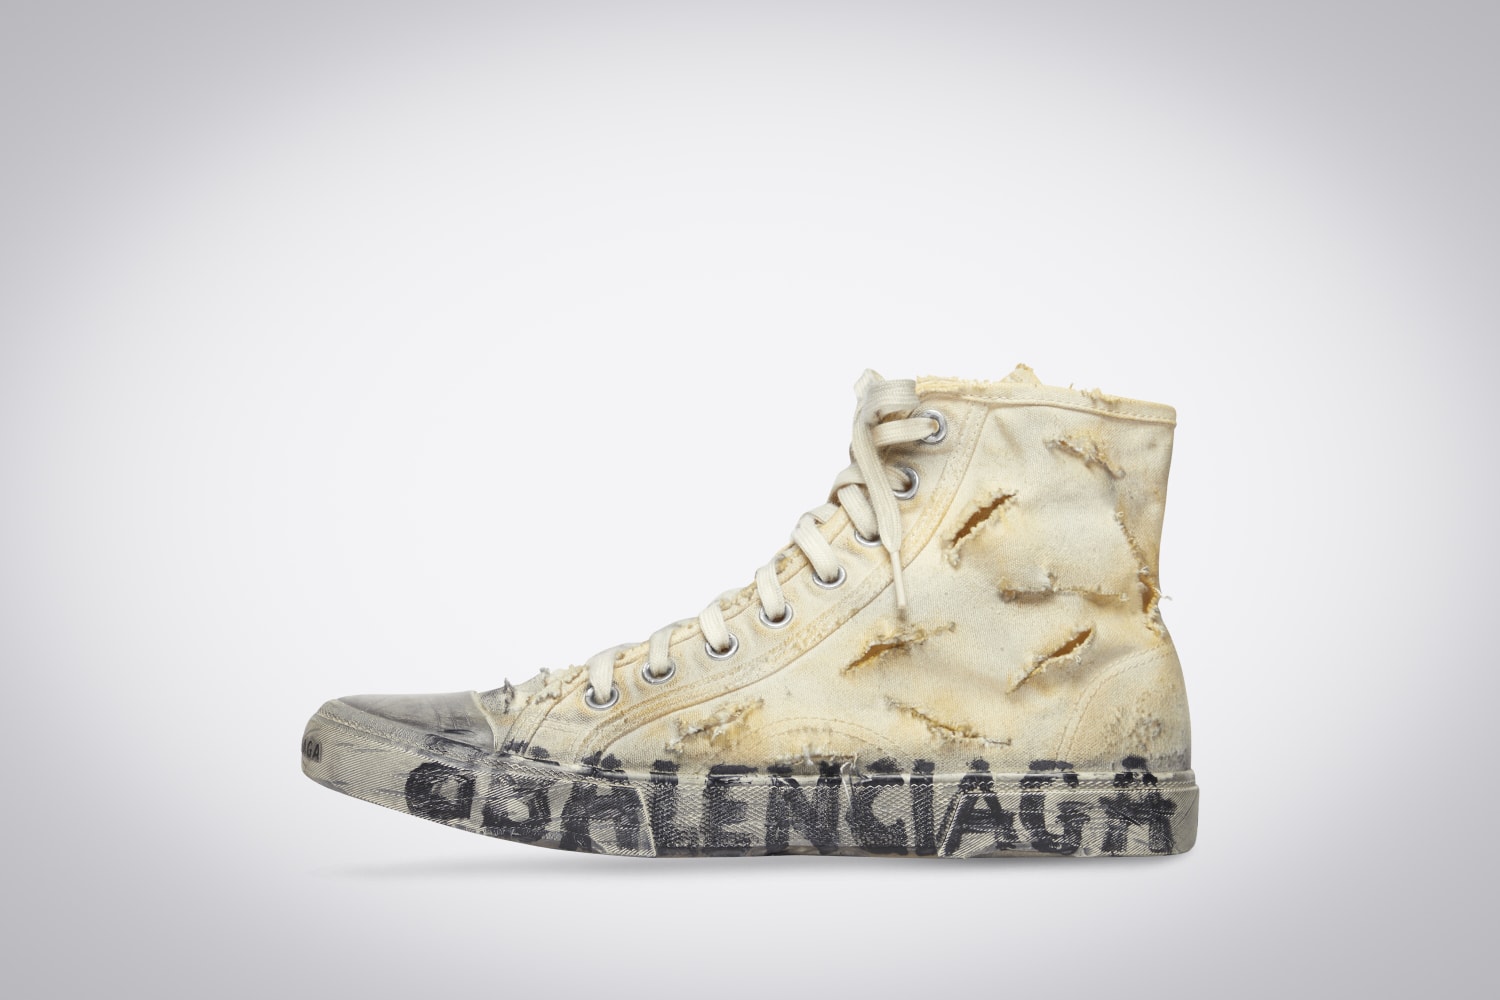 Verbonden kromme Uitgebreid Balenciaga's $1,850 'full destroyed' sneakers raise eyebrows online